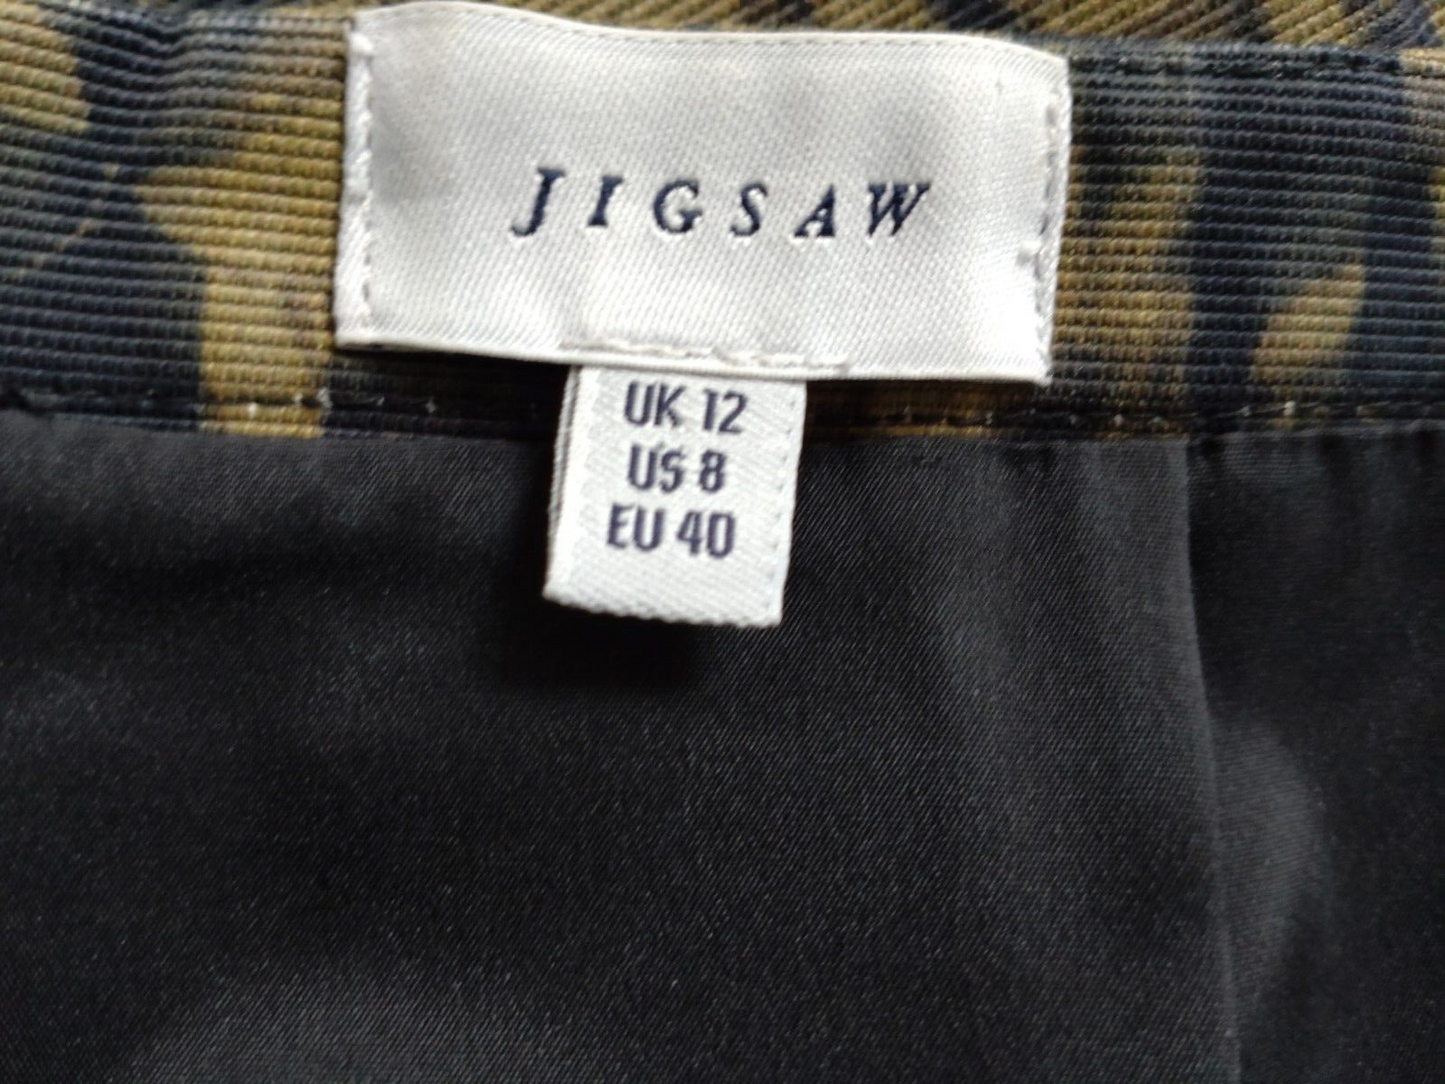 Jigsaw Knee Length Ladies Olive Green/Navy Pencil Skirt Size 12 US 8 EU 40 Timeless Fashions